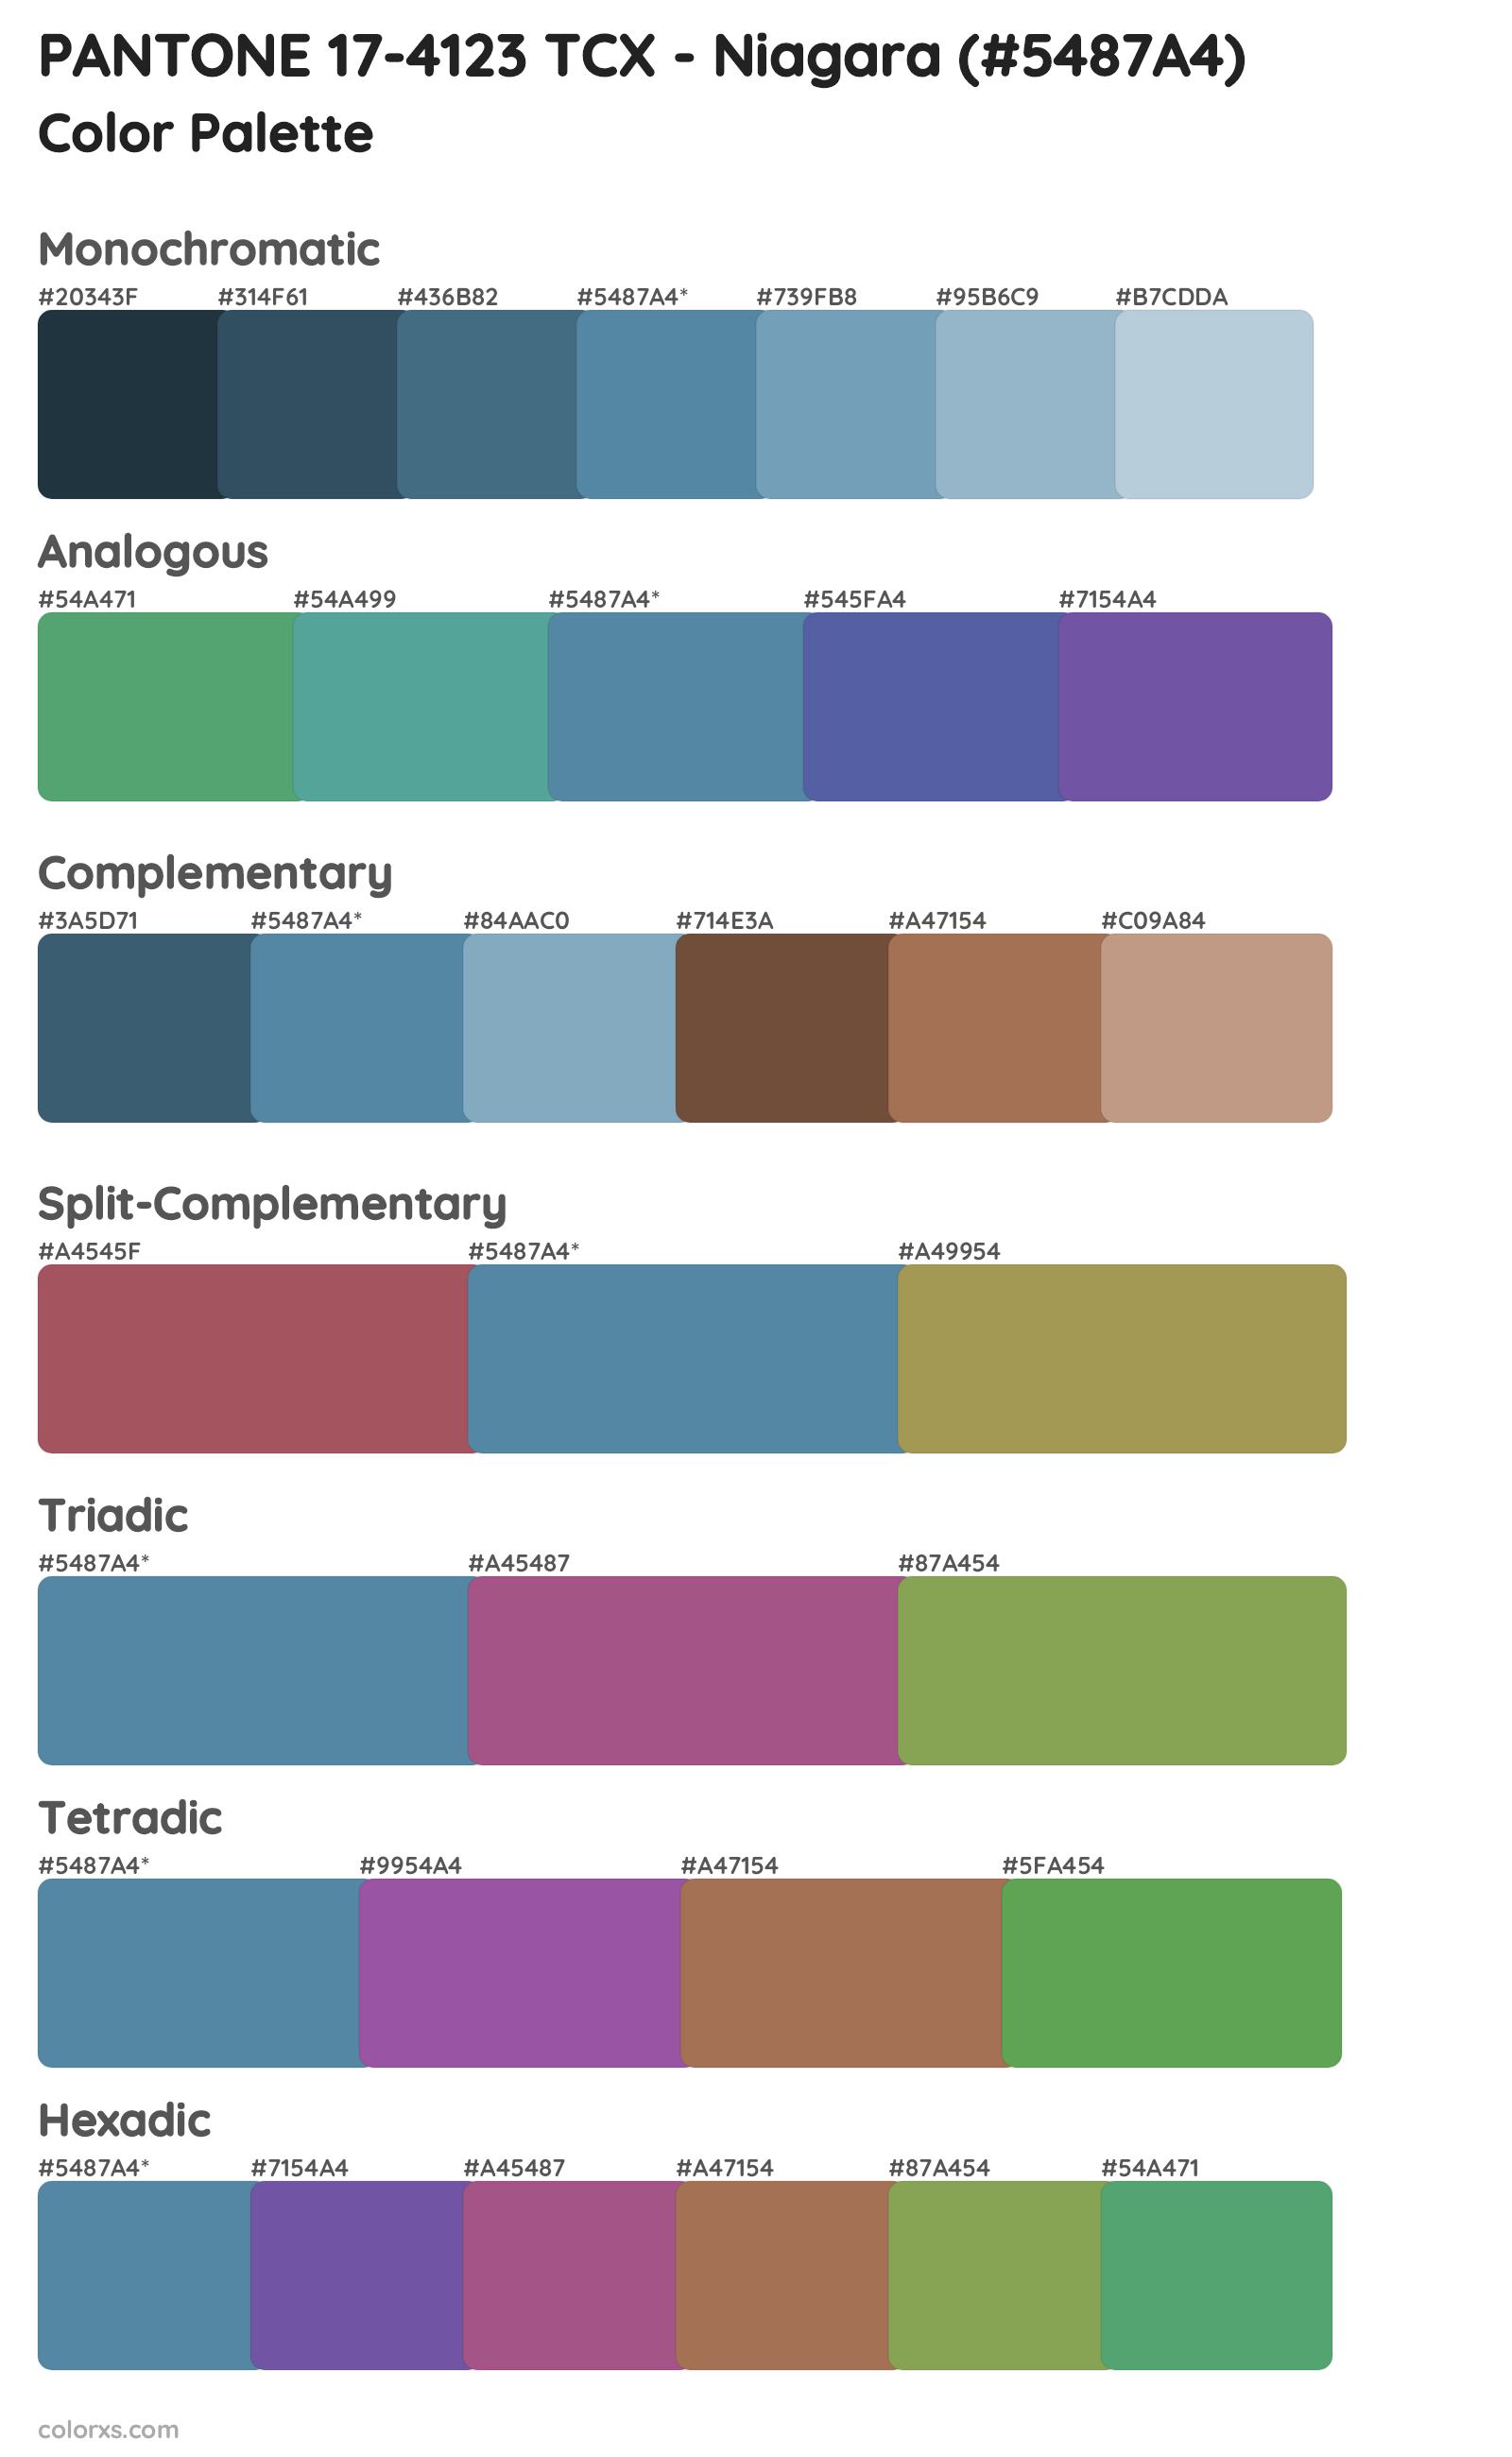 PANTONE 17-4123 TCX - Niagara Color Scheme Palettes